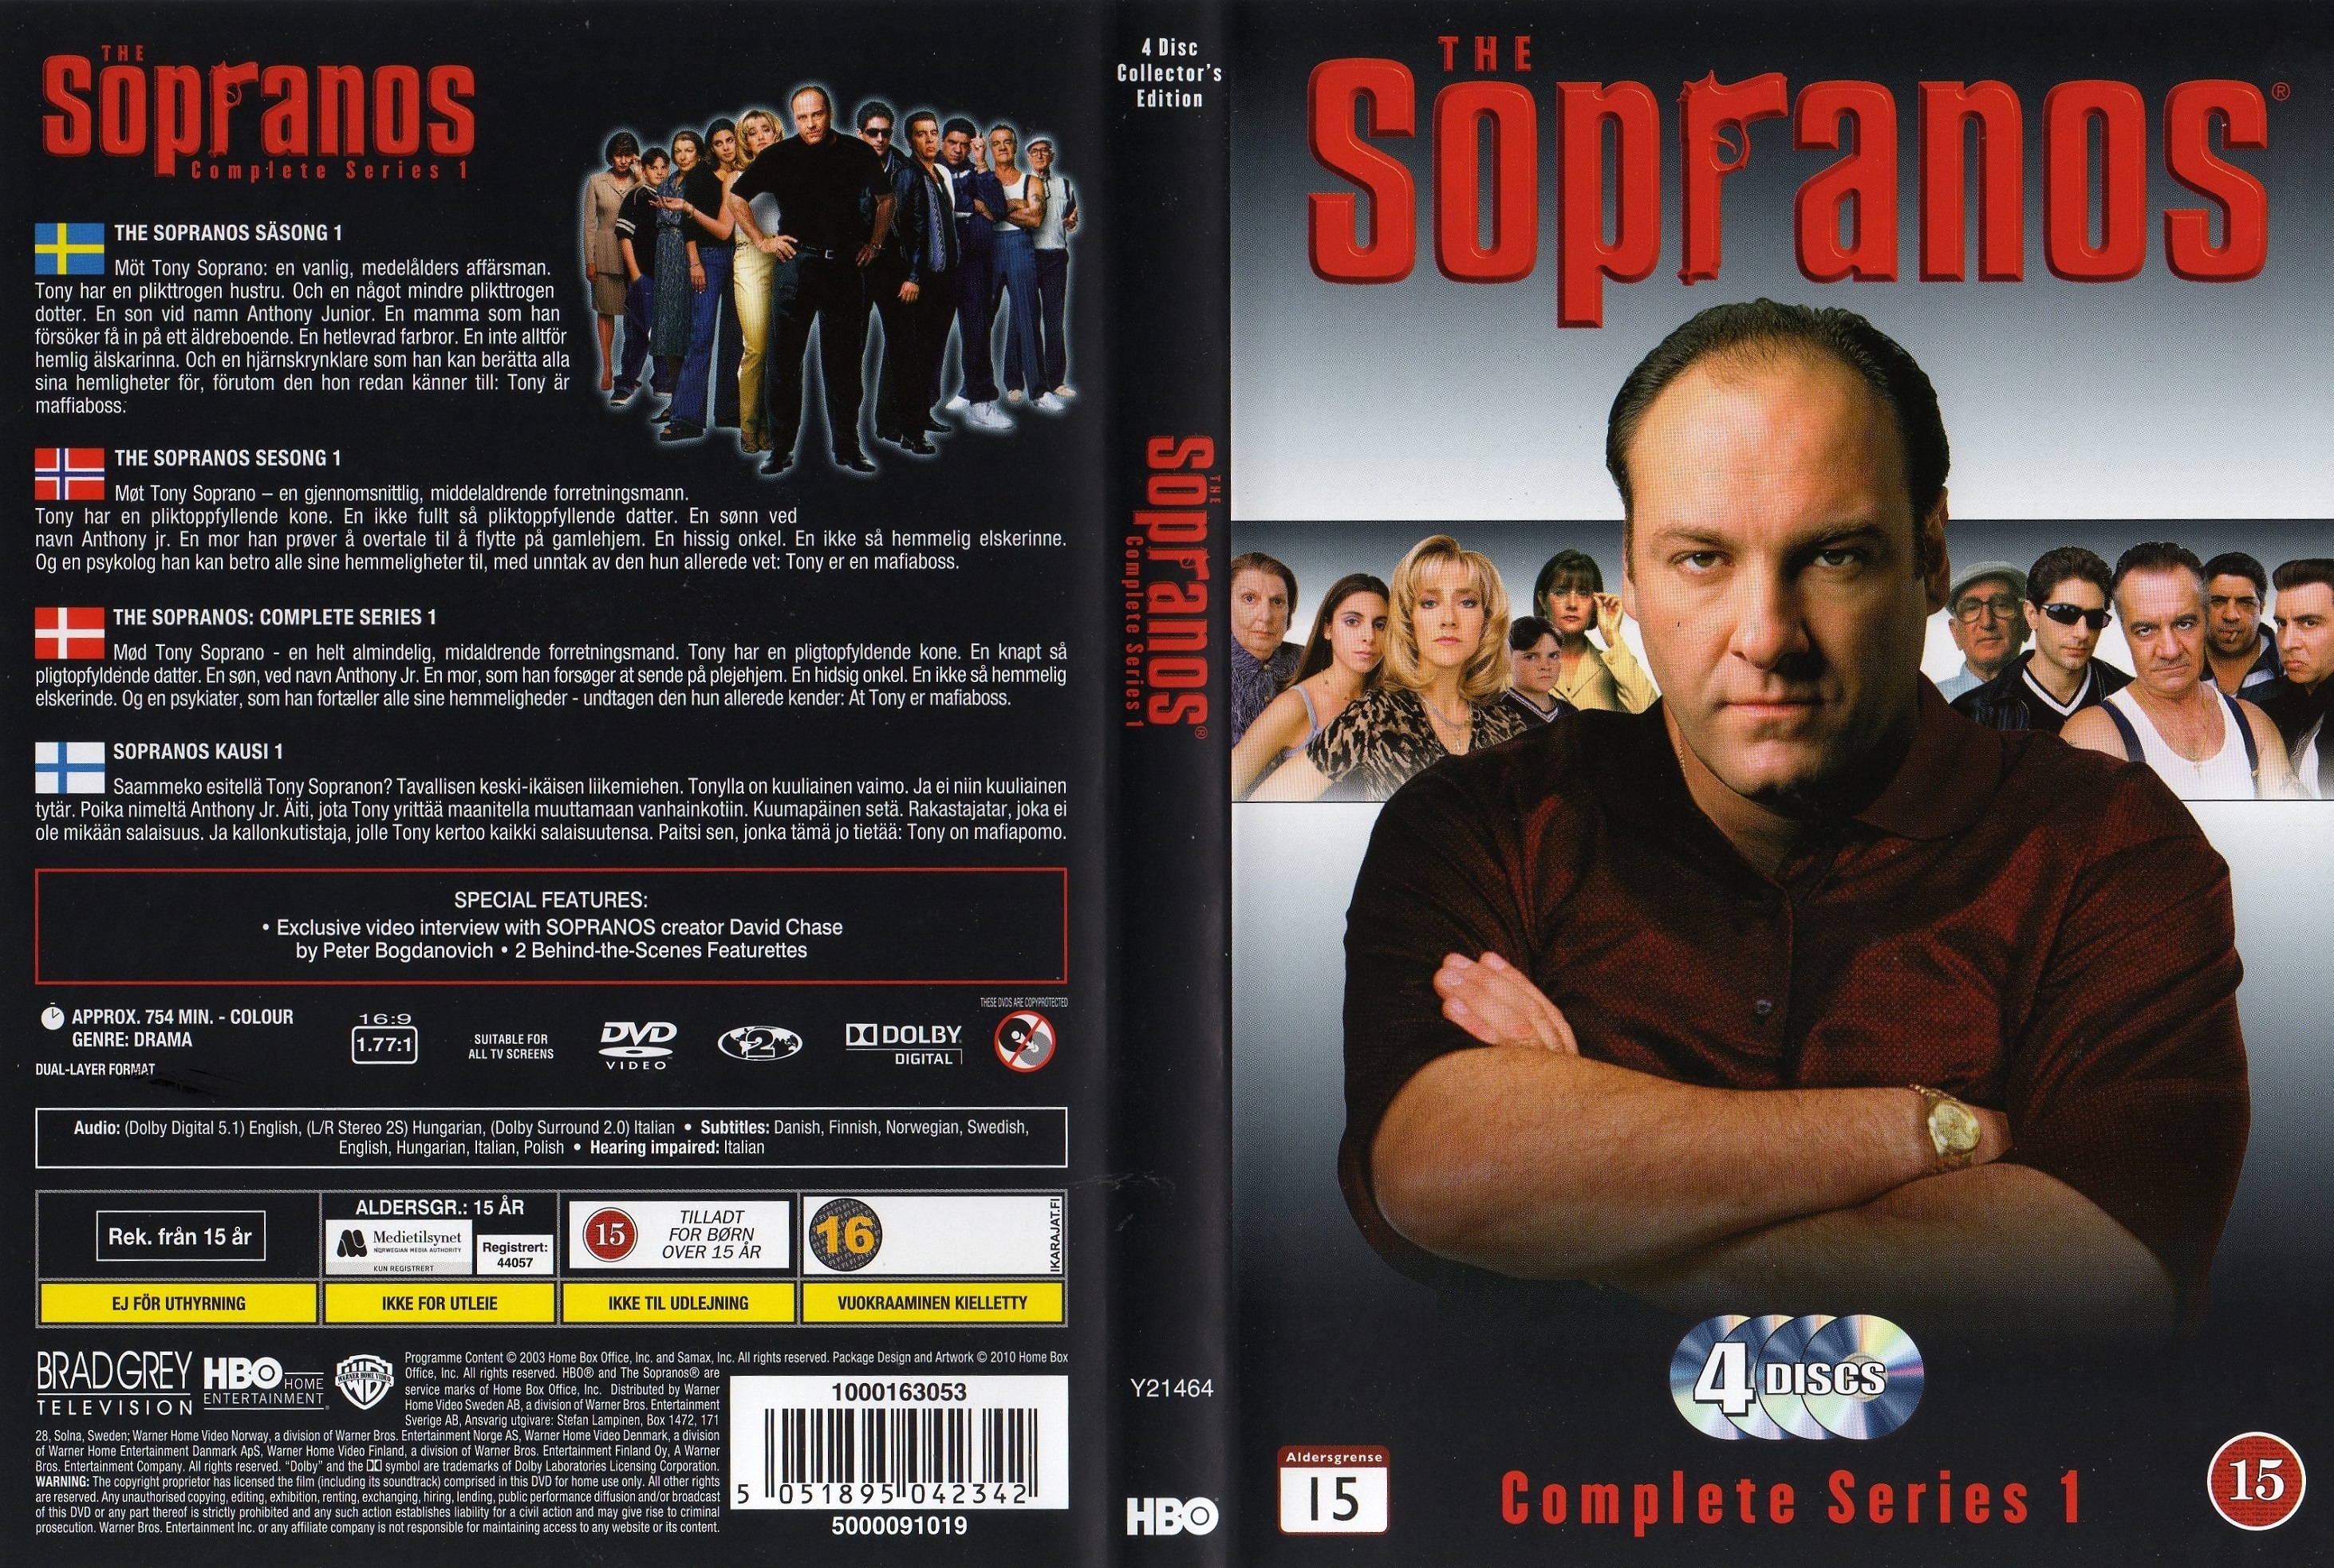 Sopranos season 1 dvd torrent corinne bailey rae trouble sleeping subtitulado torrent